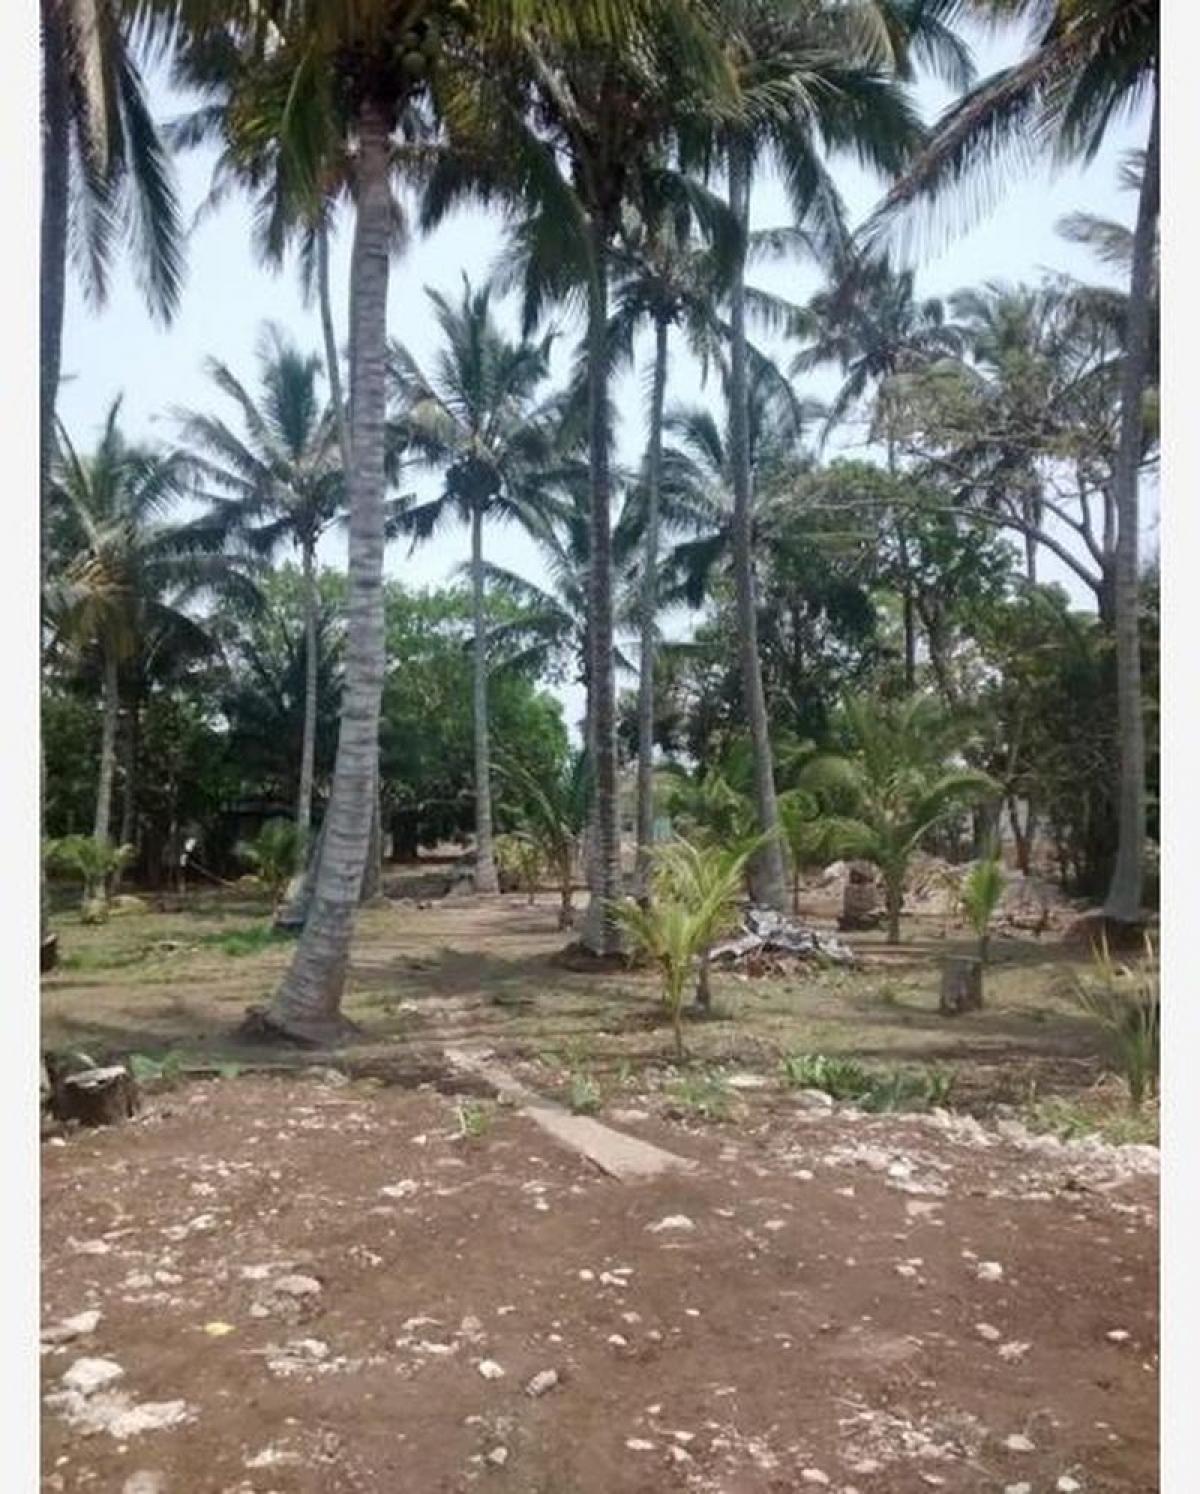 Picture of Residential Land For Sale in Veracruz, Veracruz, Mexico